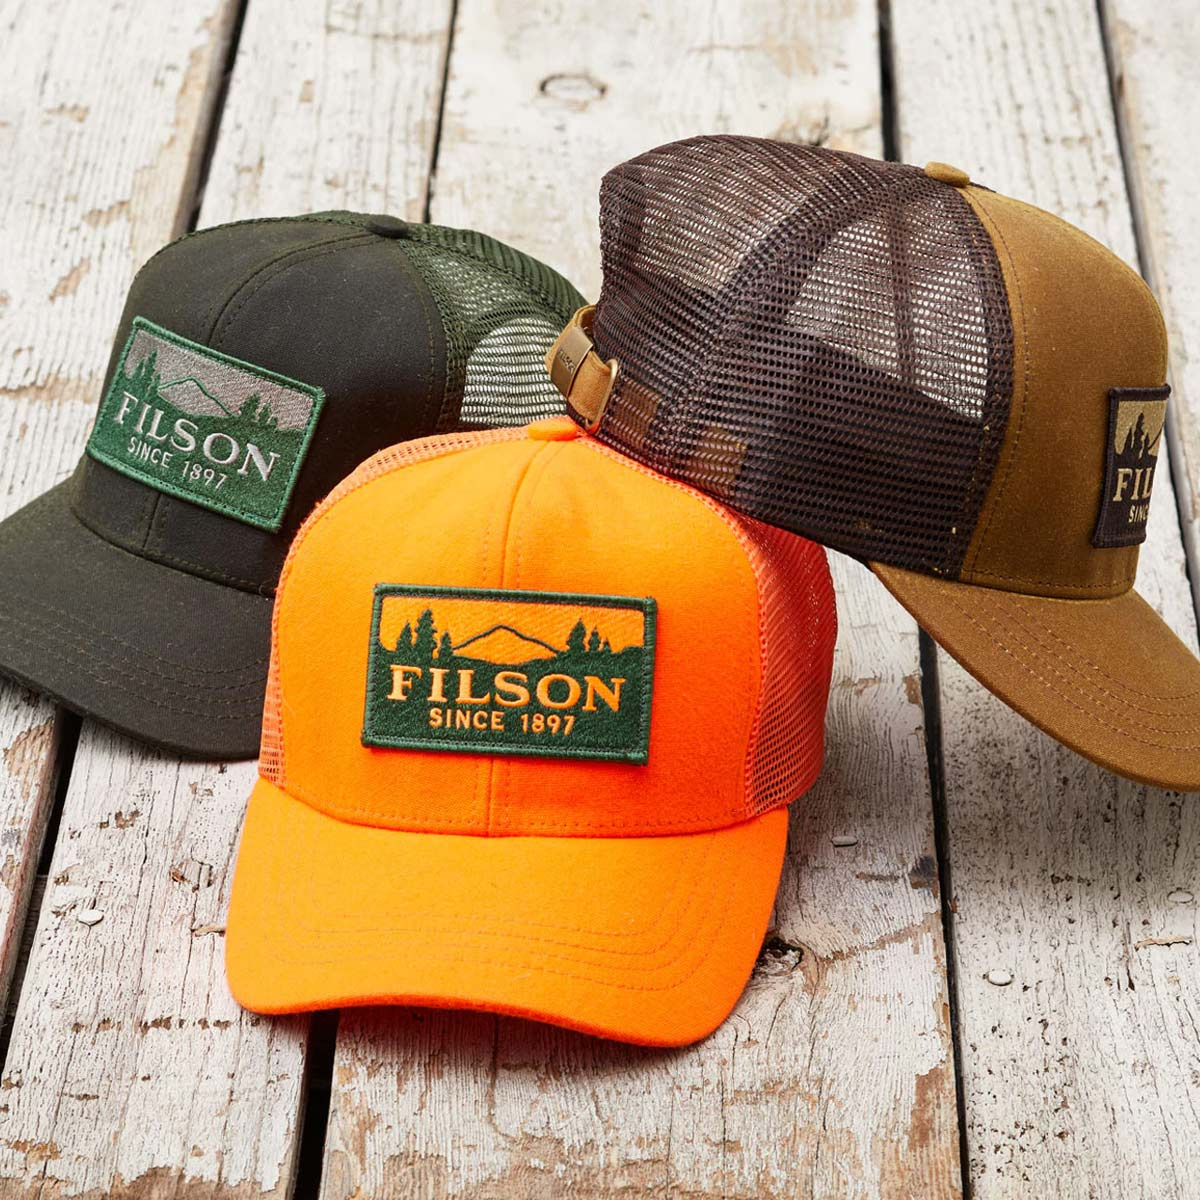 Filson Logger Mesh Cap 11030237-Blaze-Orange, durable cap made of water-repellent Ten-Mile Cloth